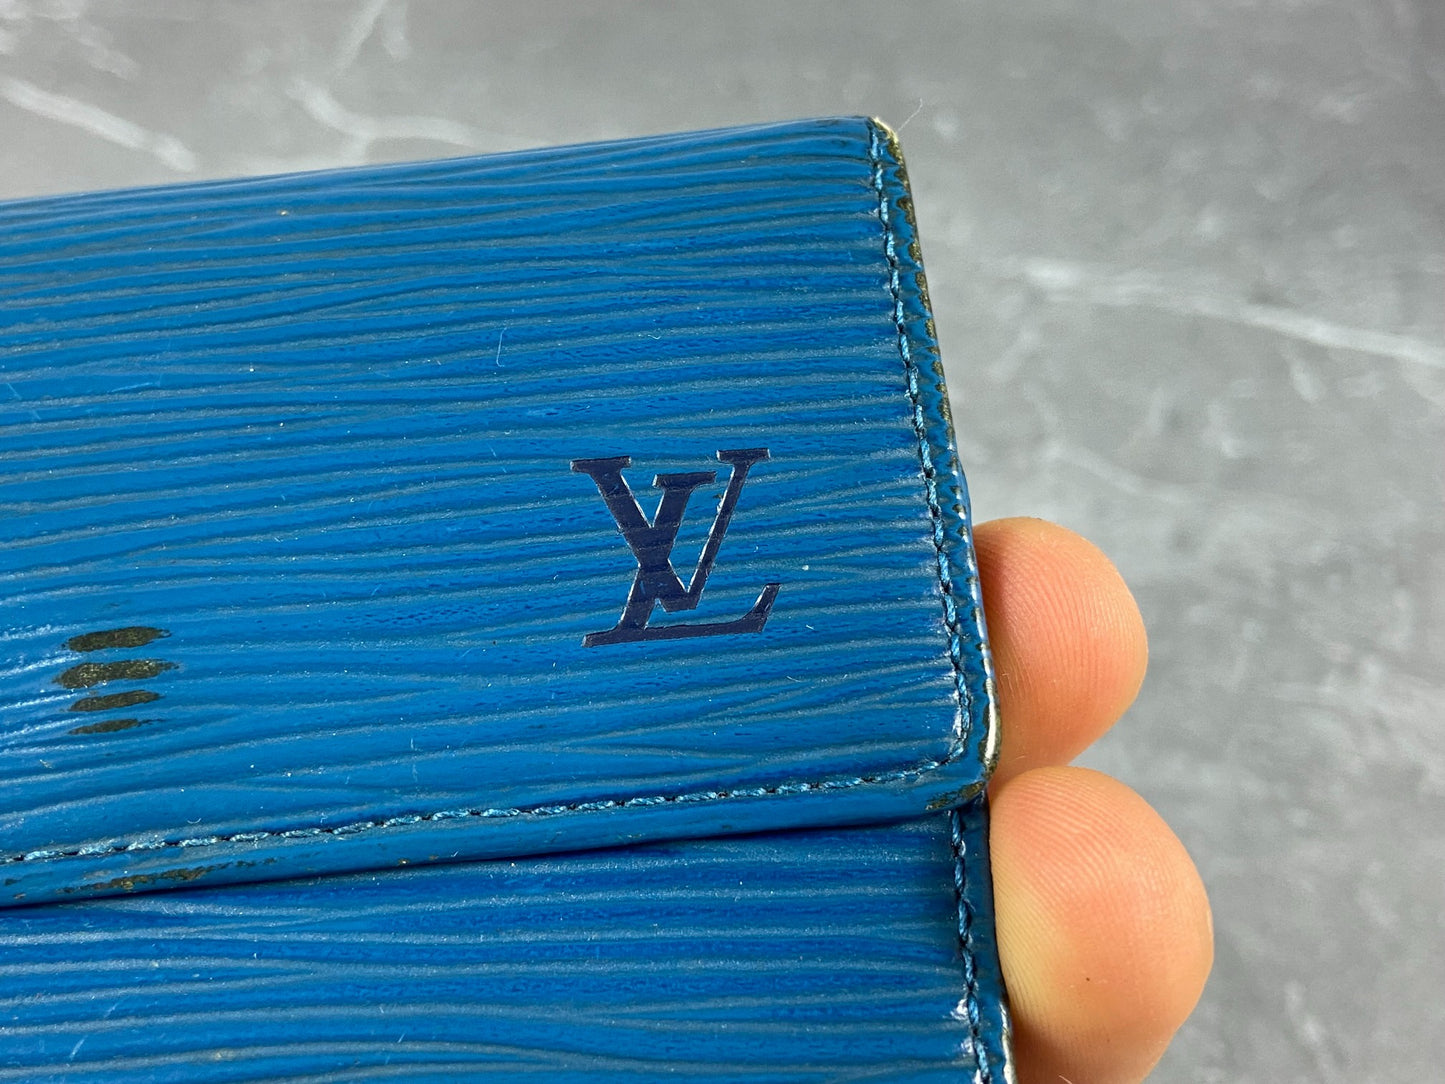 Louis Vuitton 6 Key Holder Blue Epi Leather